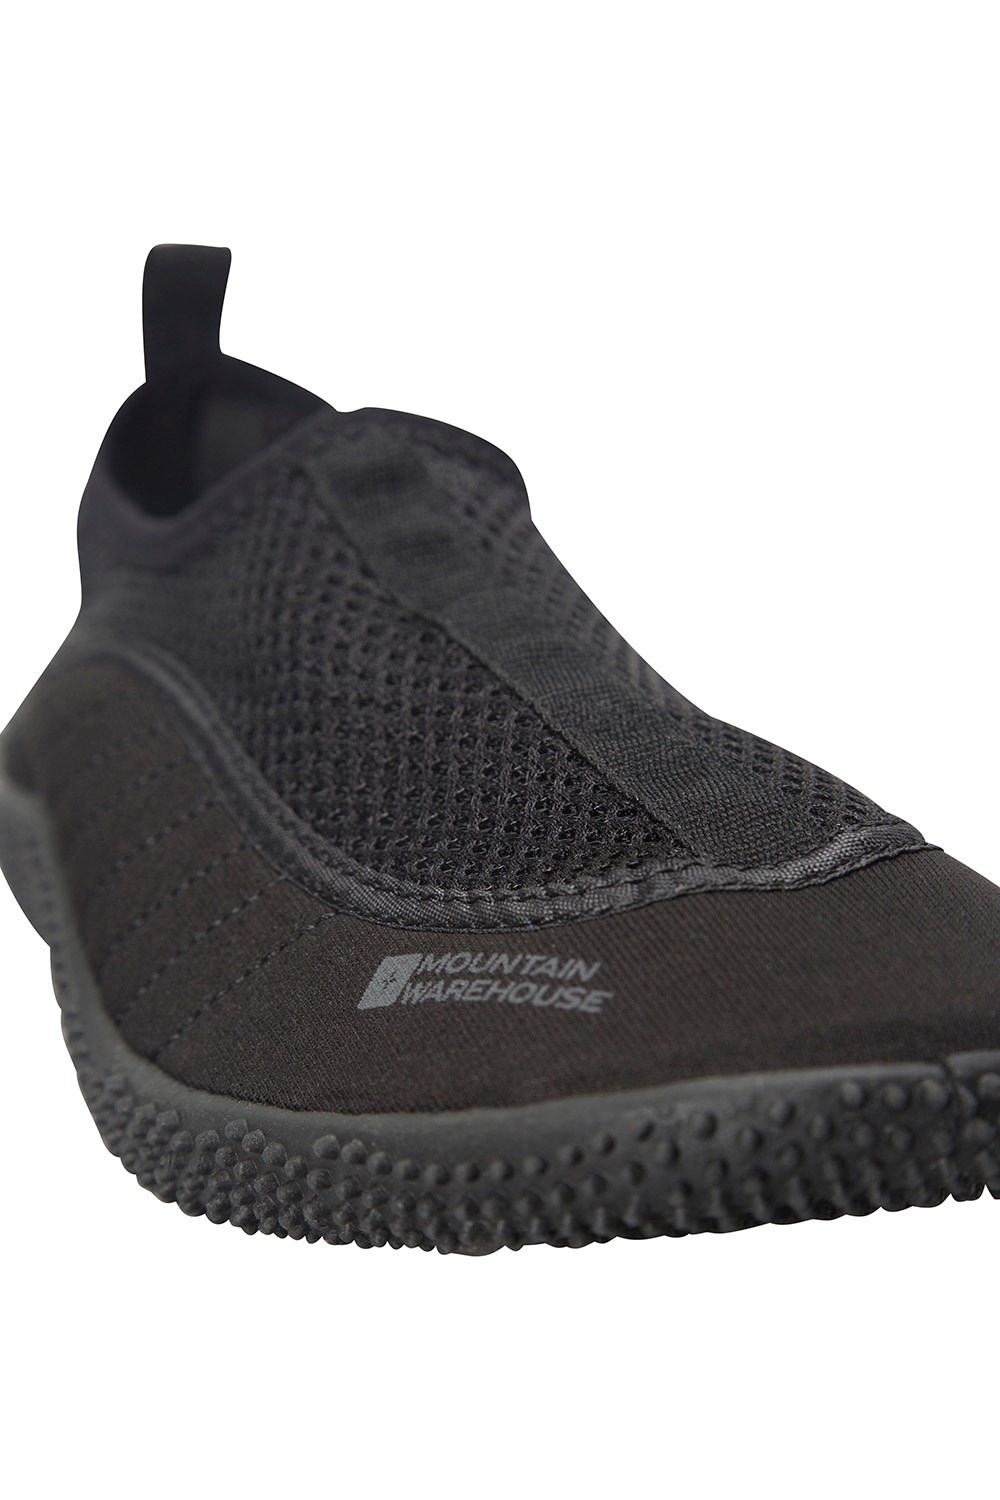 mountain warehouse water shoes